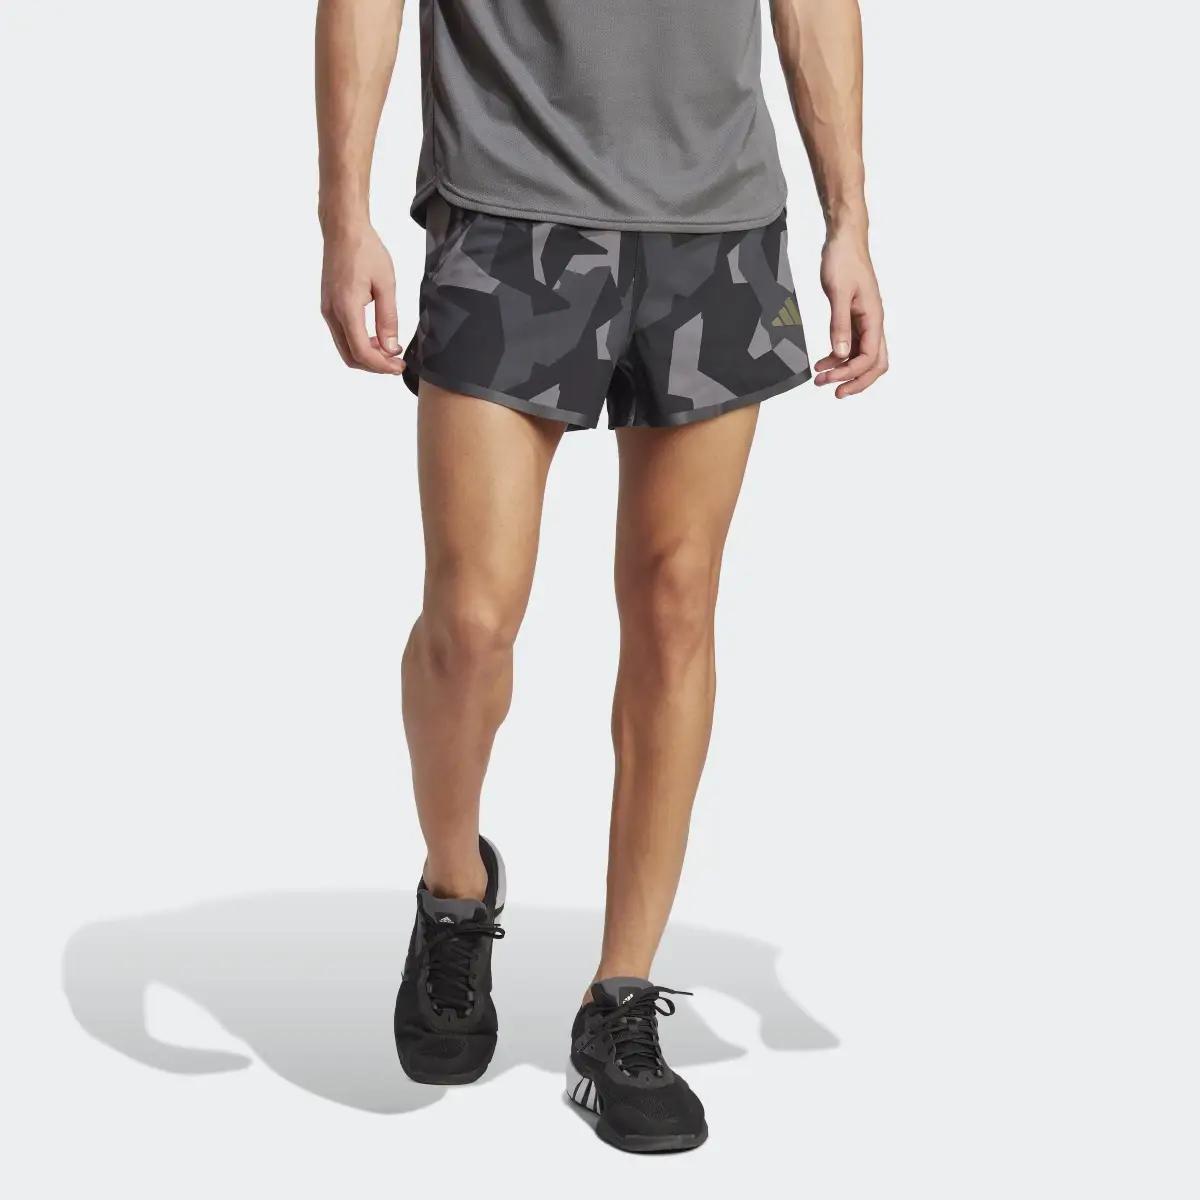 Adidas Shorts Designed for Training Pro Series Strength. 1